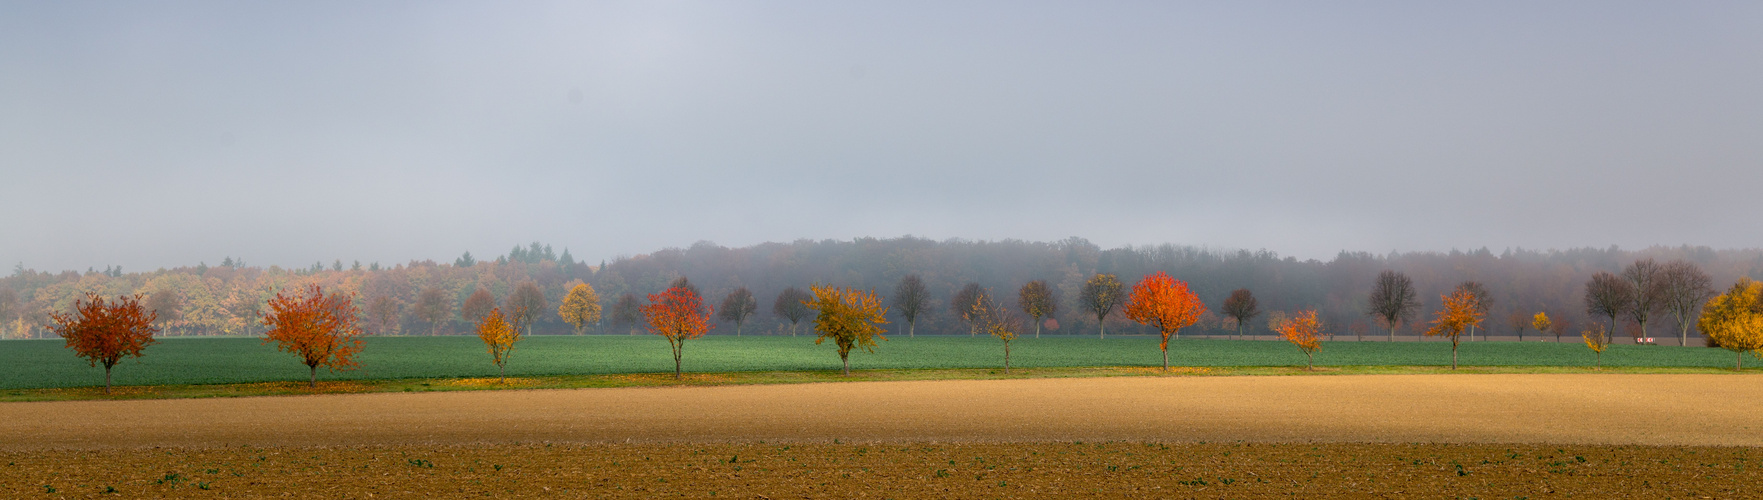 Herbst : Sonne-Nebel-Farben